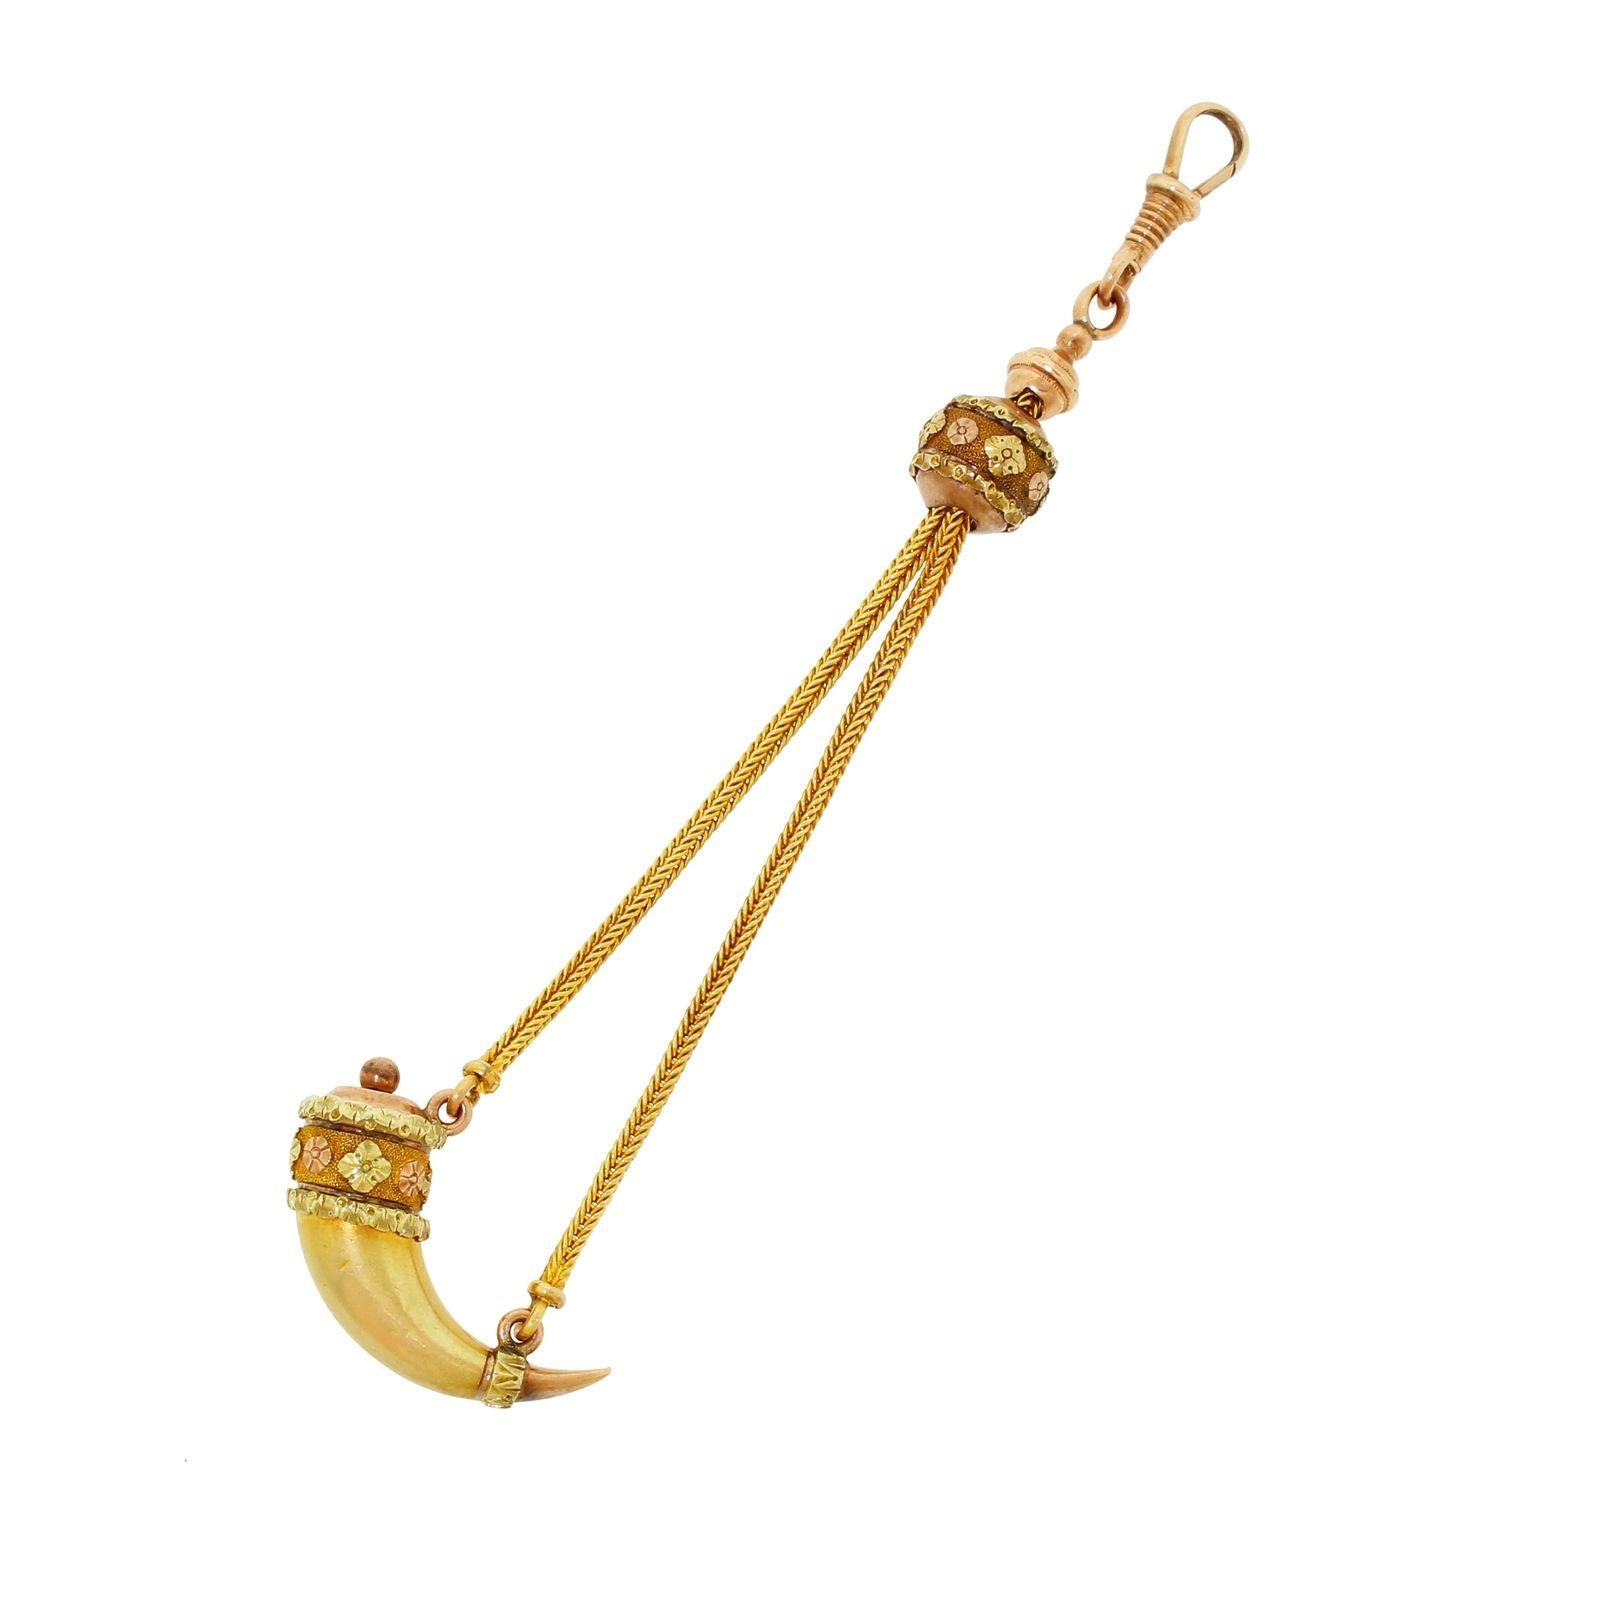 Antique Georgian 14-16K Gold Hunting Drinking Powder Horn Pocket Watch Fob Chain